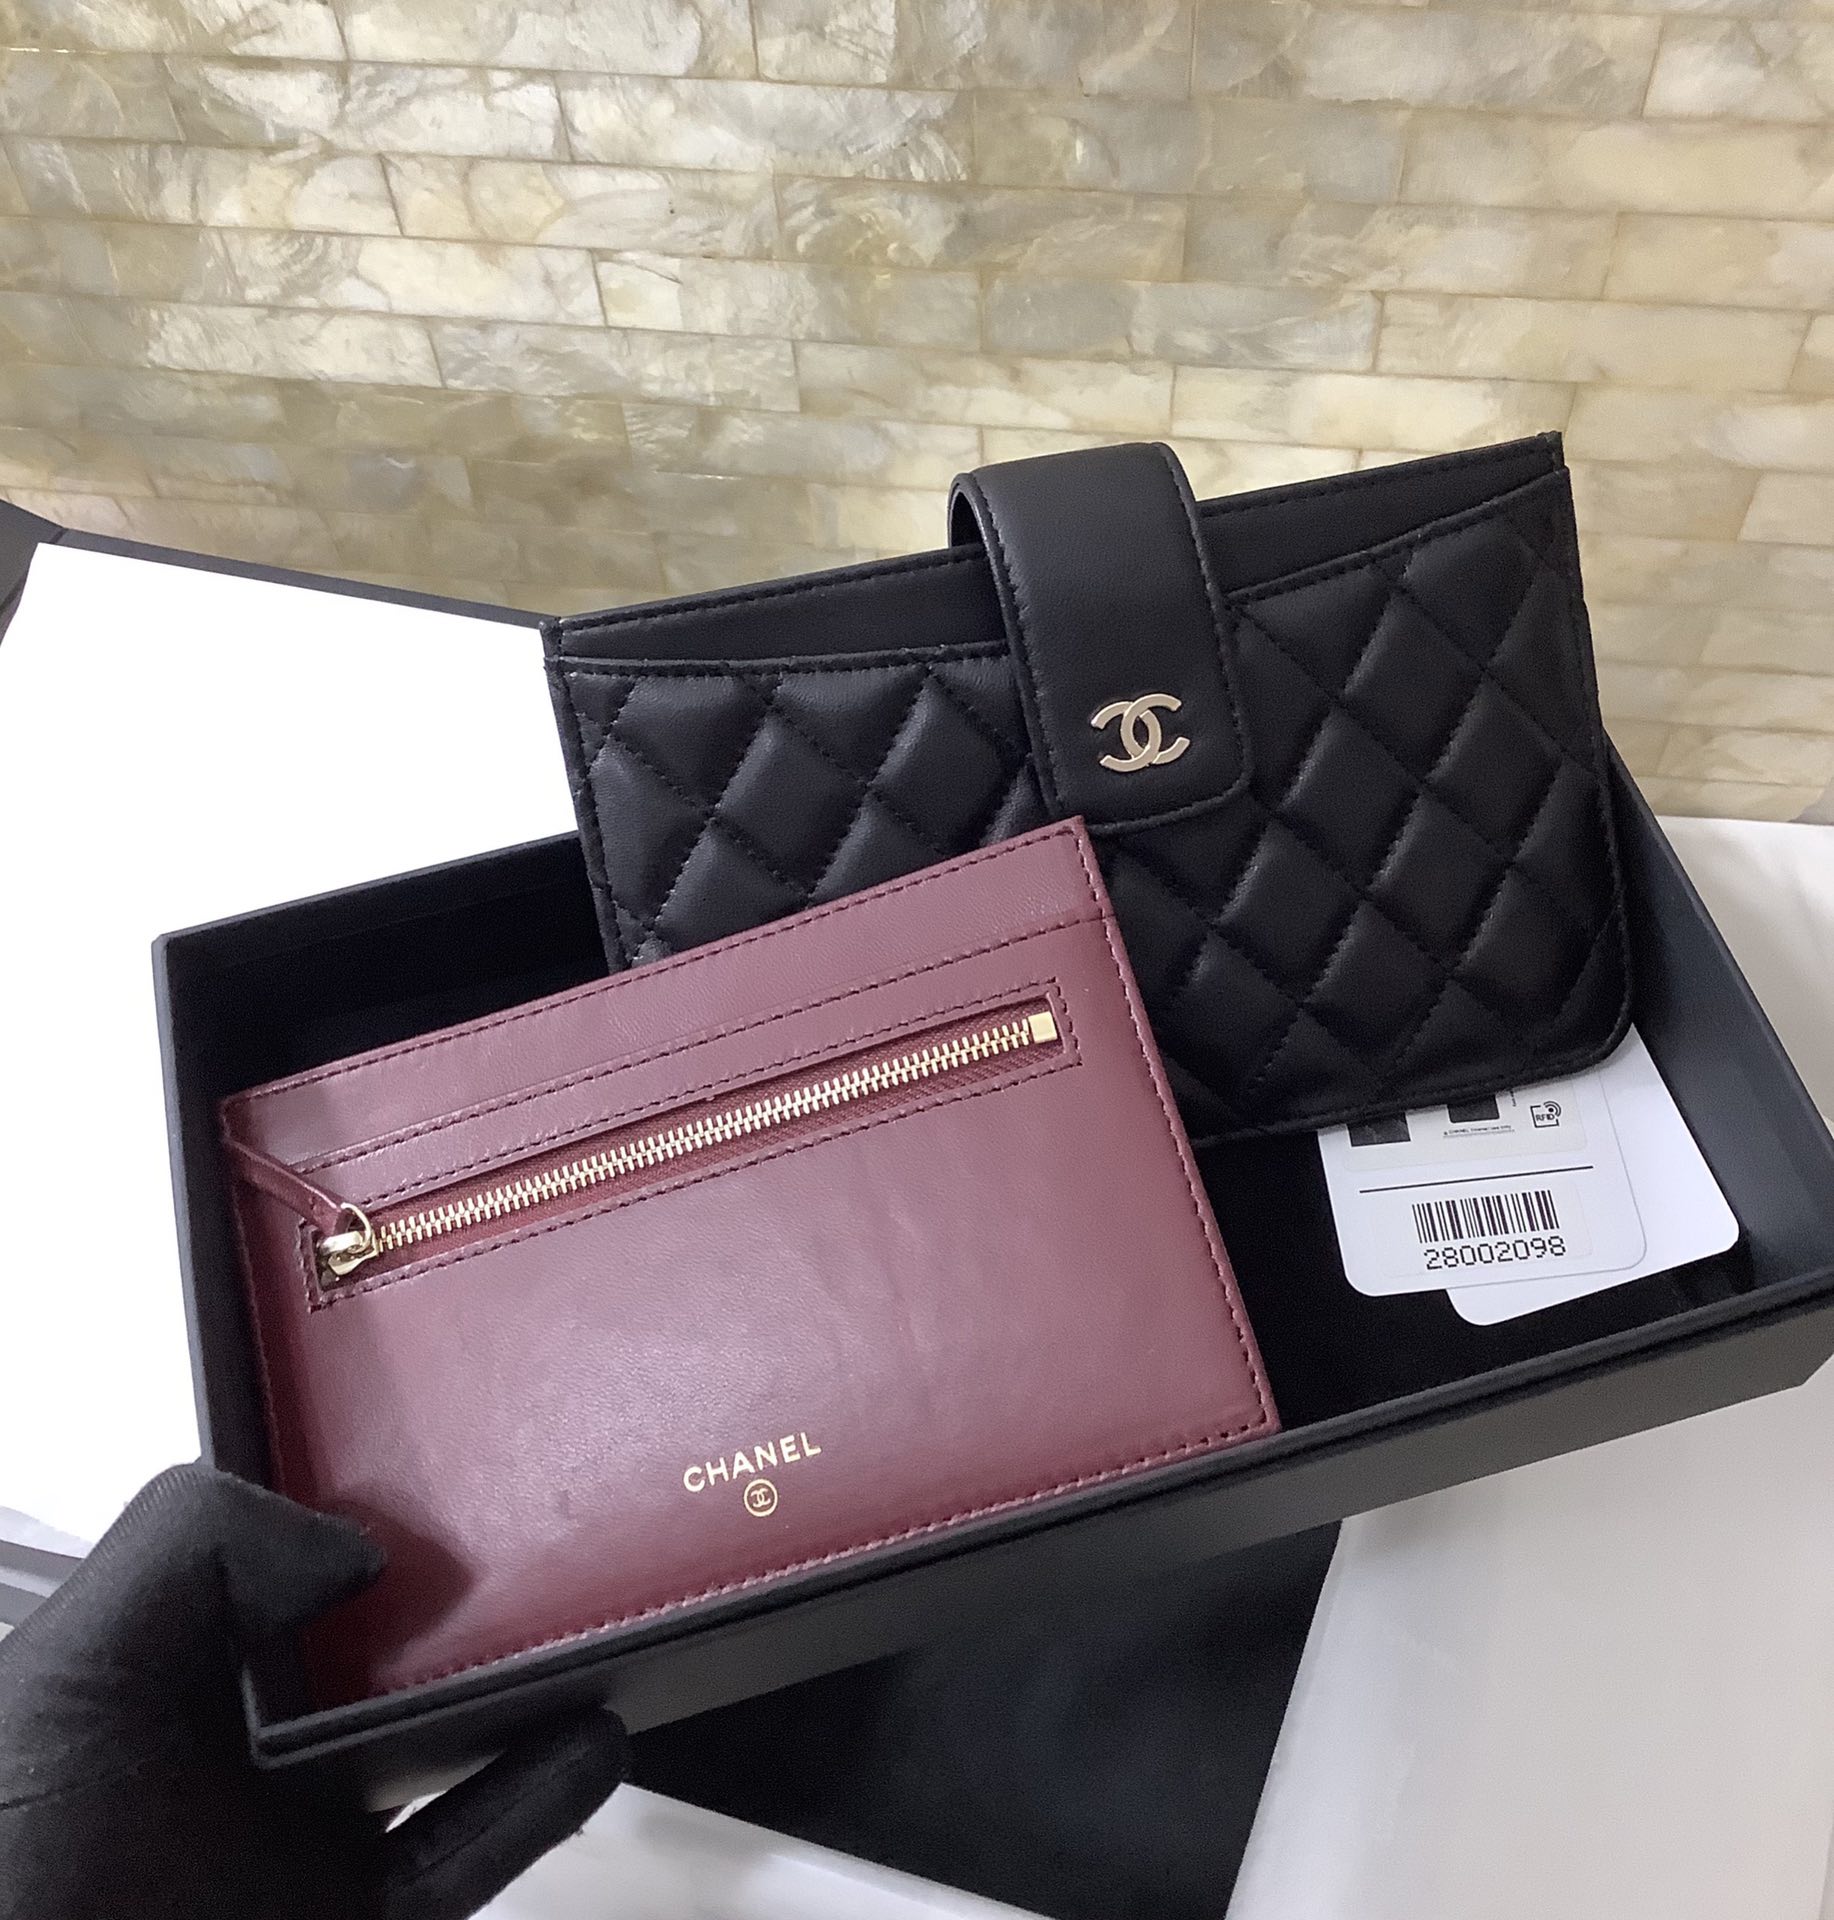 Chanel二件套卡包羊皮长款零钱包手机包卡包 A81902黑色/金扣